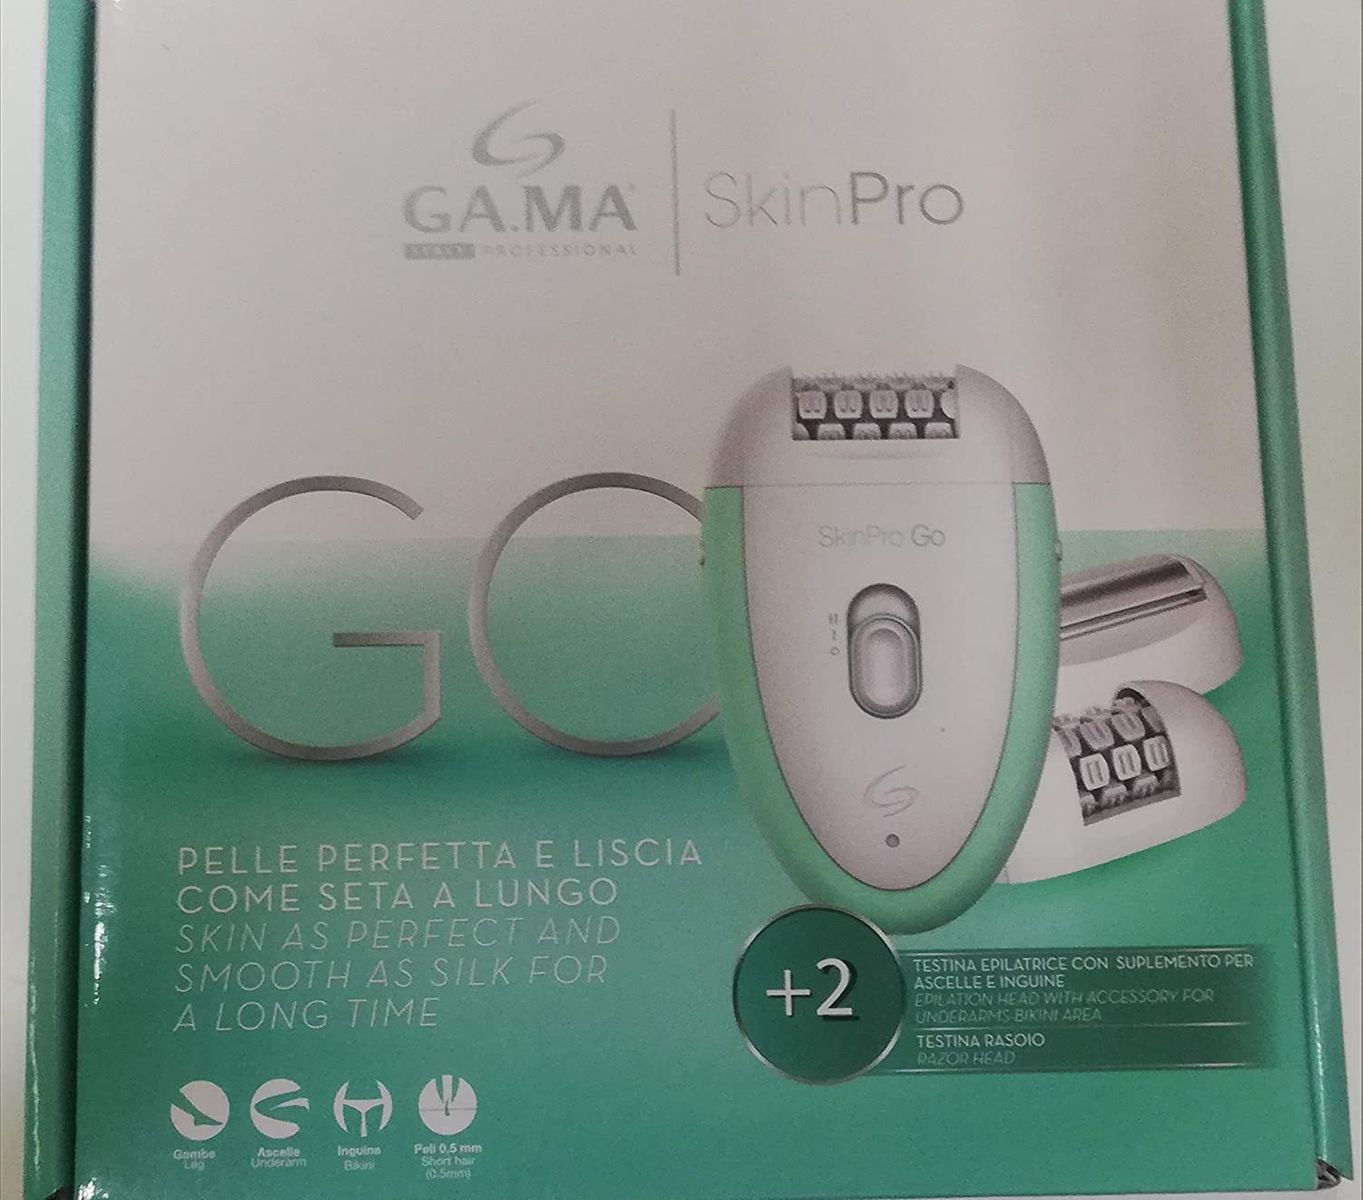 Gama Italy Professional GE0130 Skin Pro Go Ii